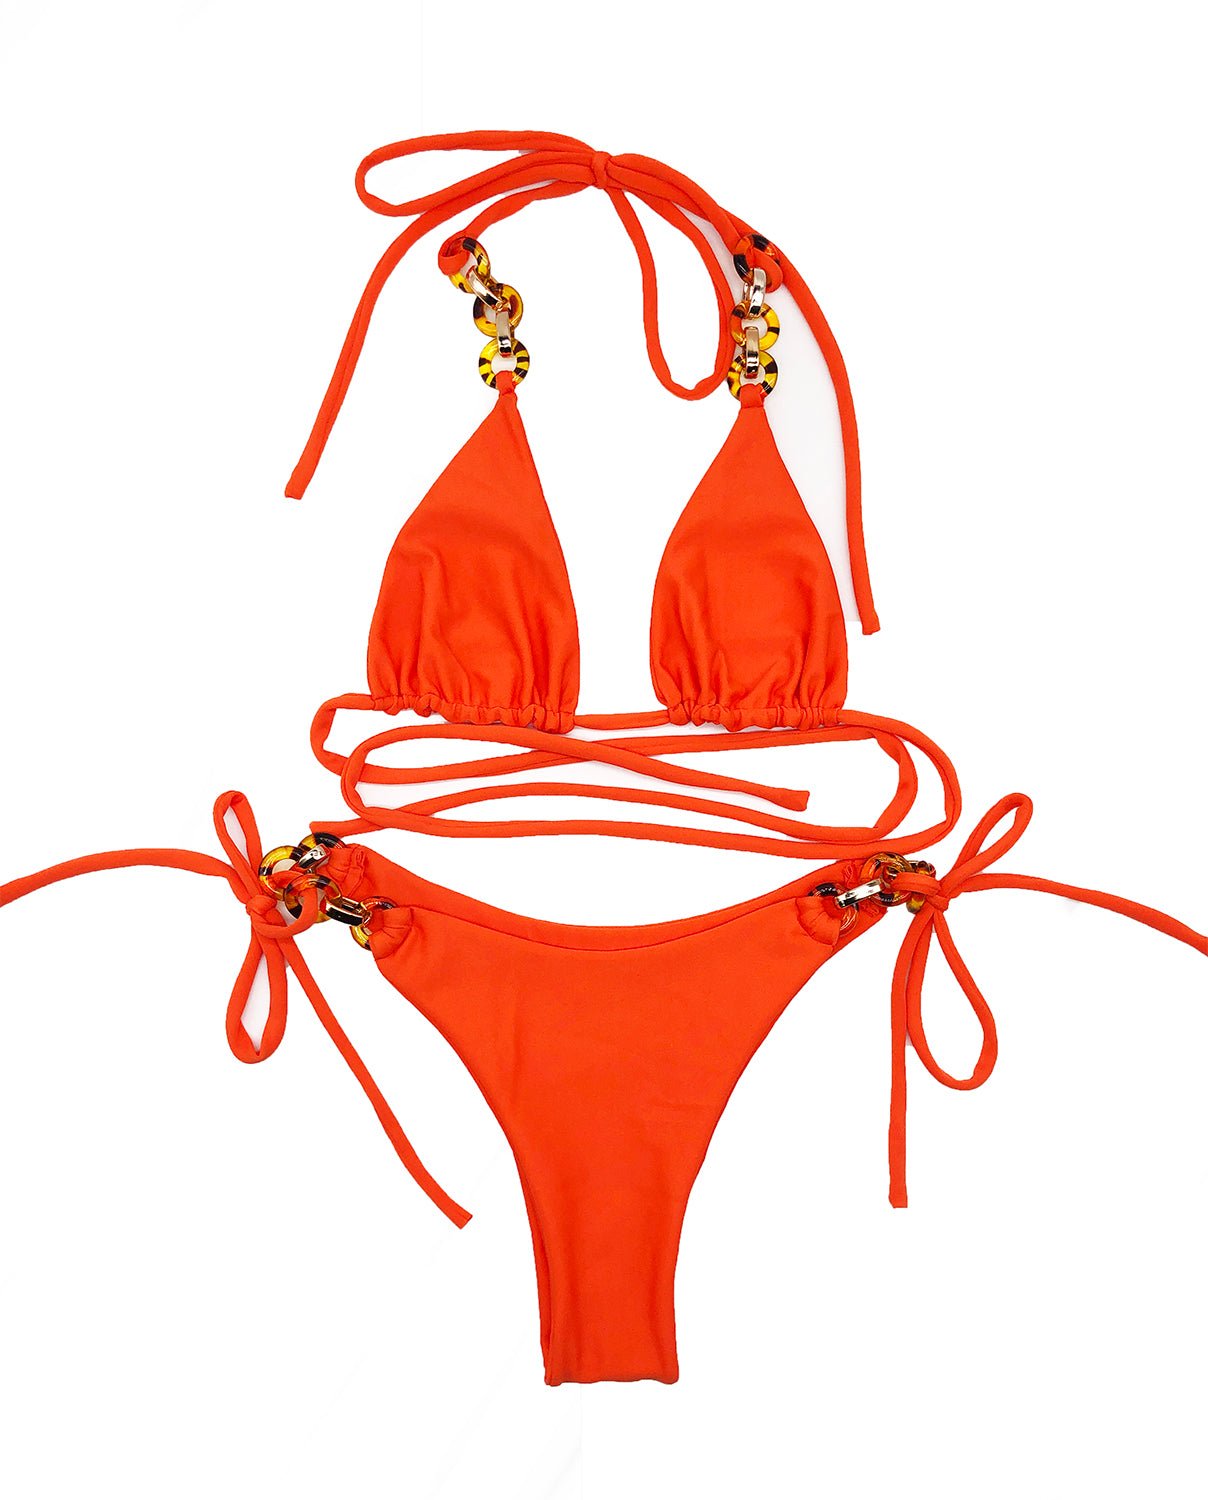 Christen Harper - Sports Illustrated Swimsuit - Bottom - Gabriela Pires Beachwear